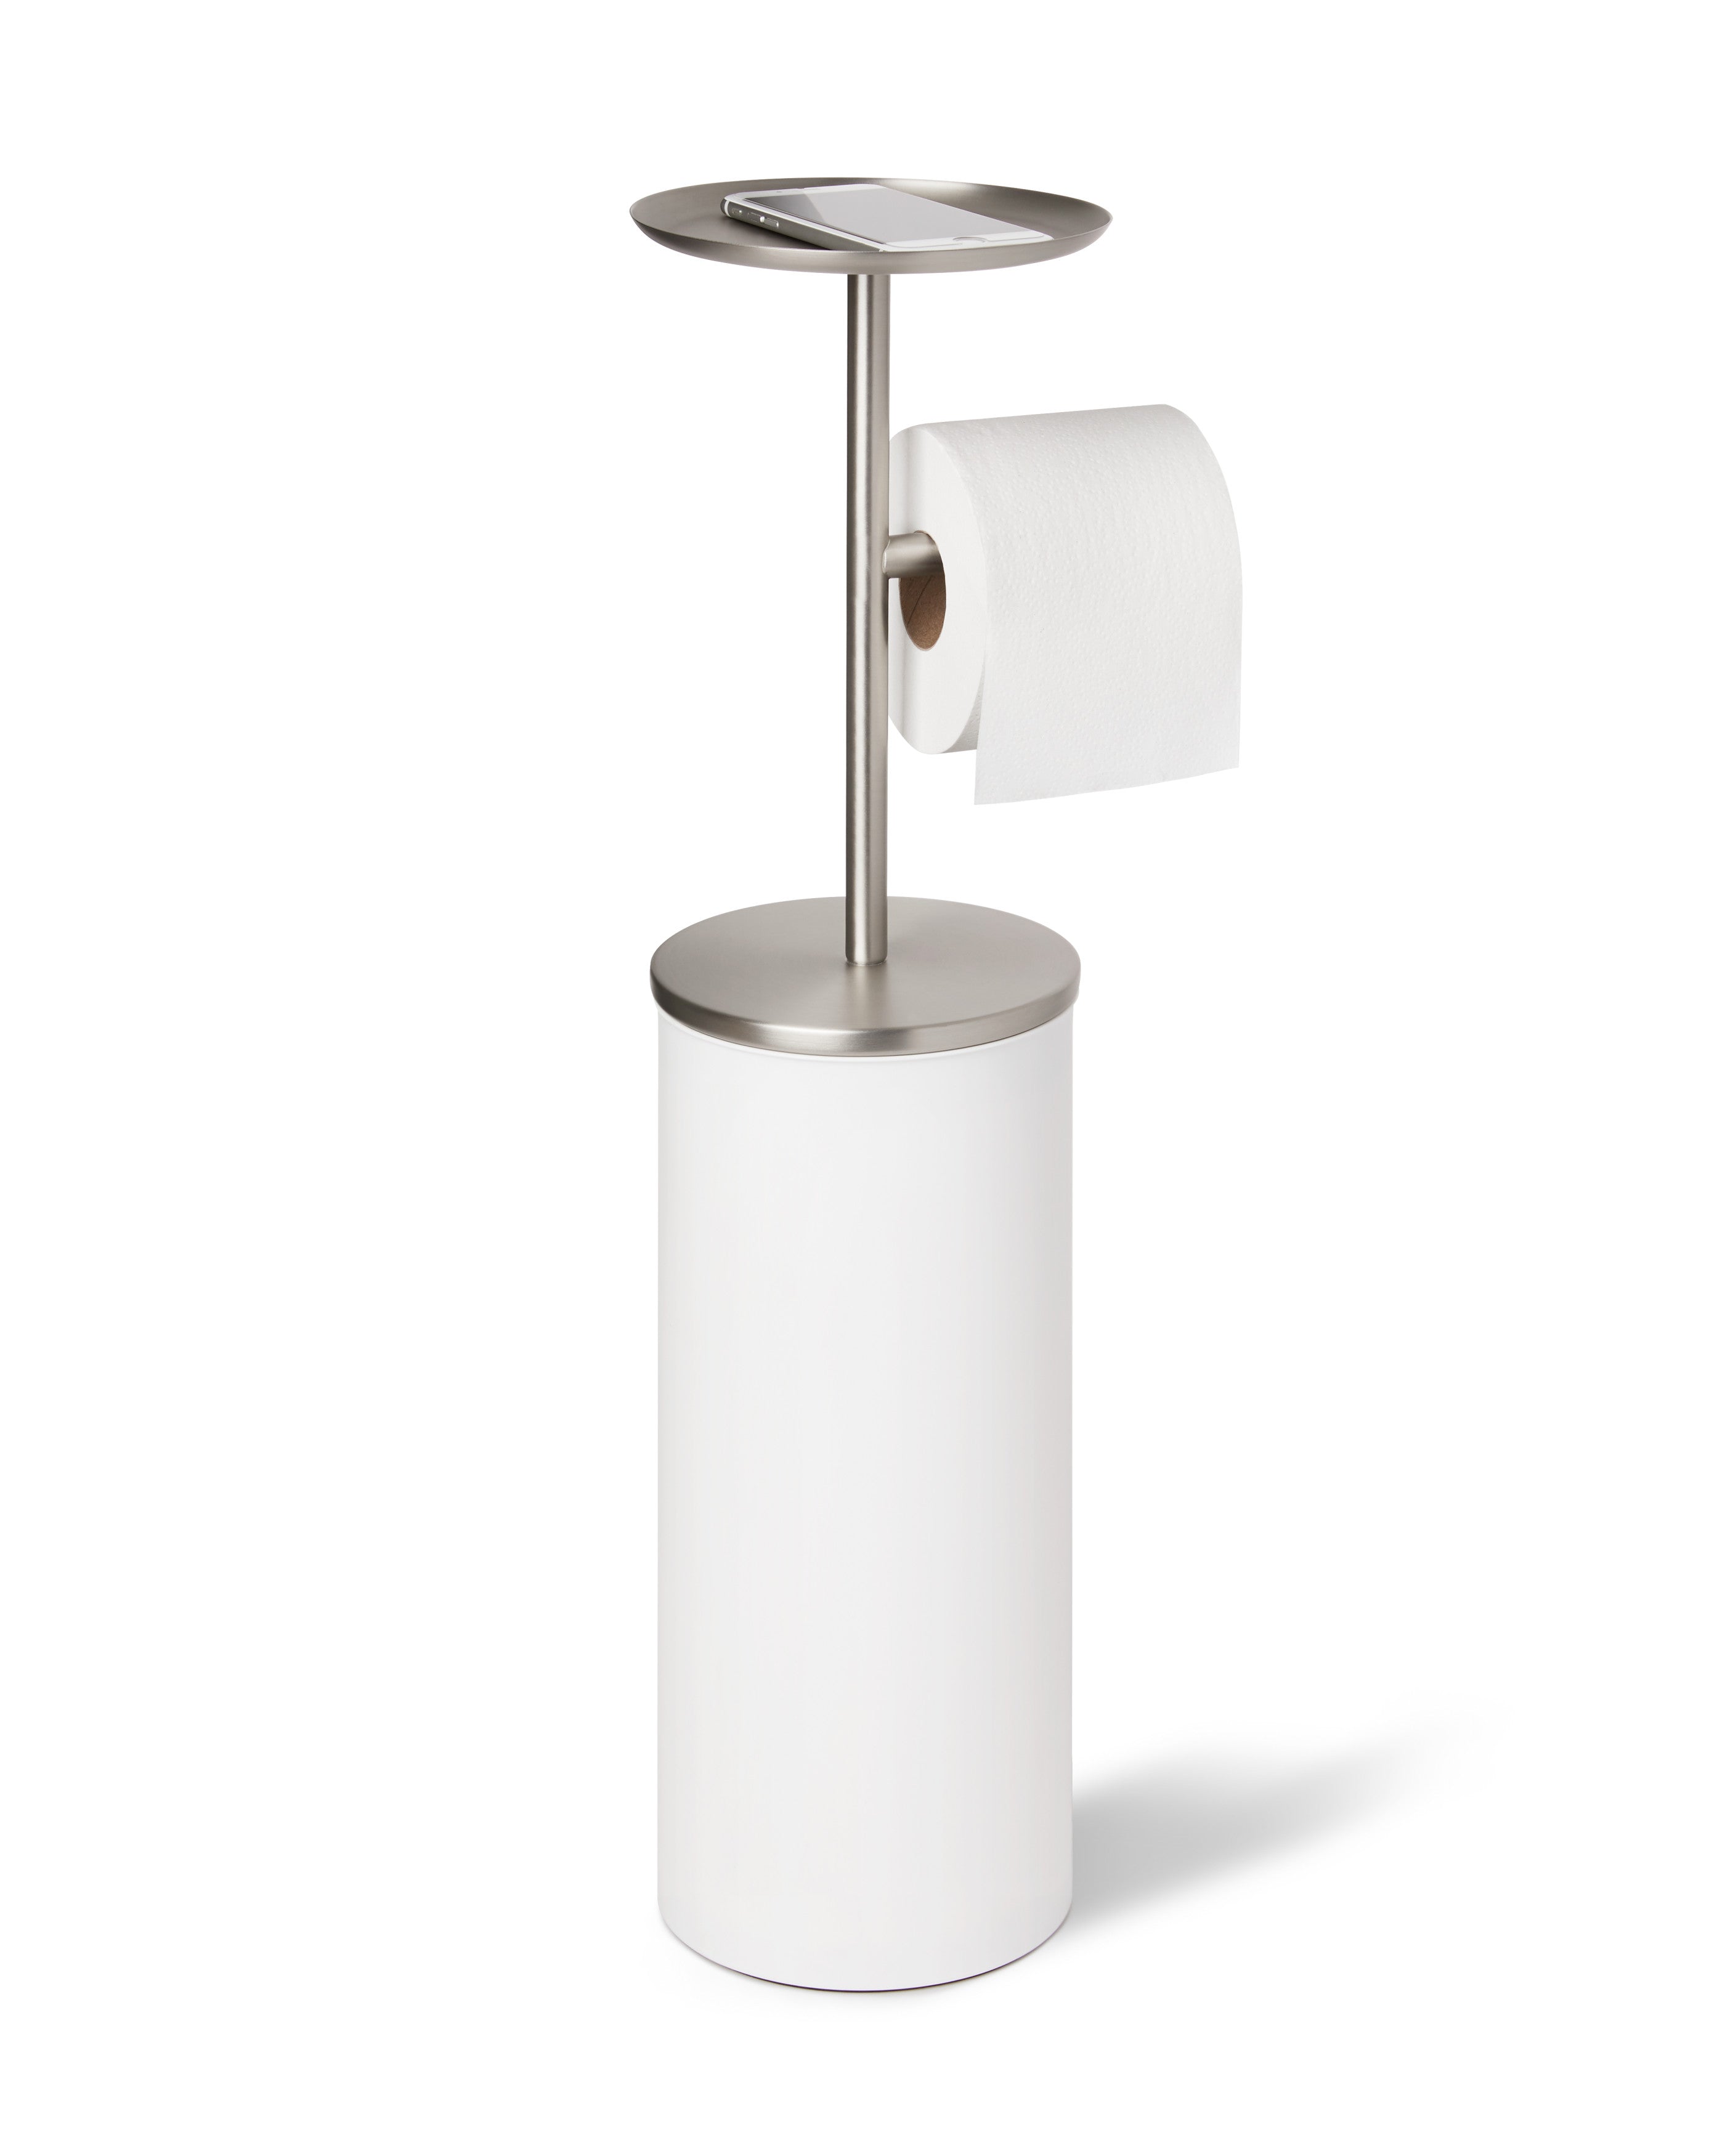 Portaloo Umbra & Toilet Stand - Stylish Convenient | Paper